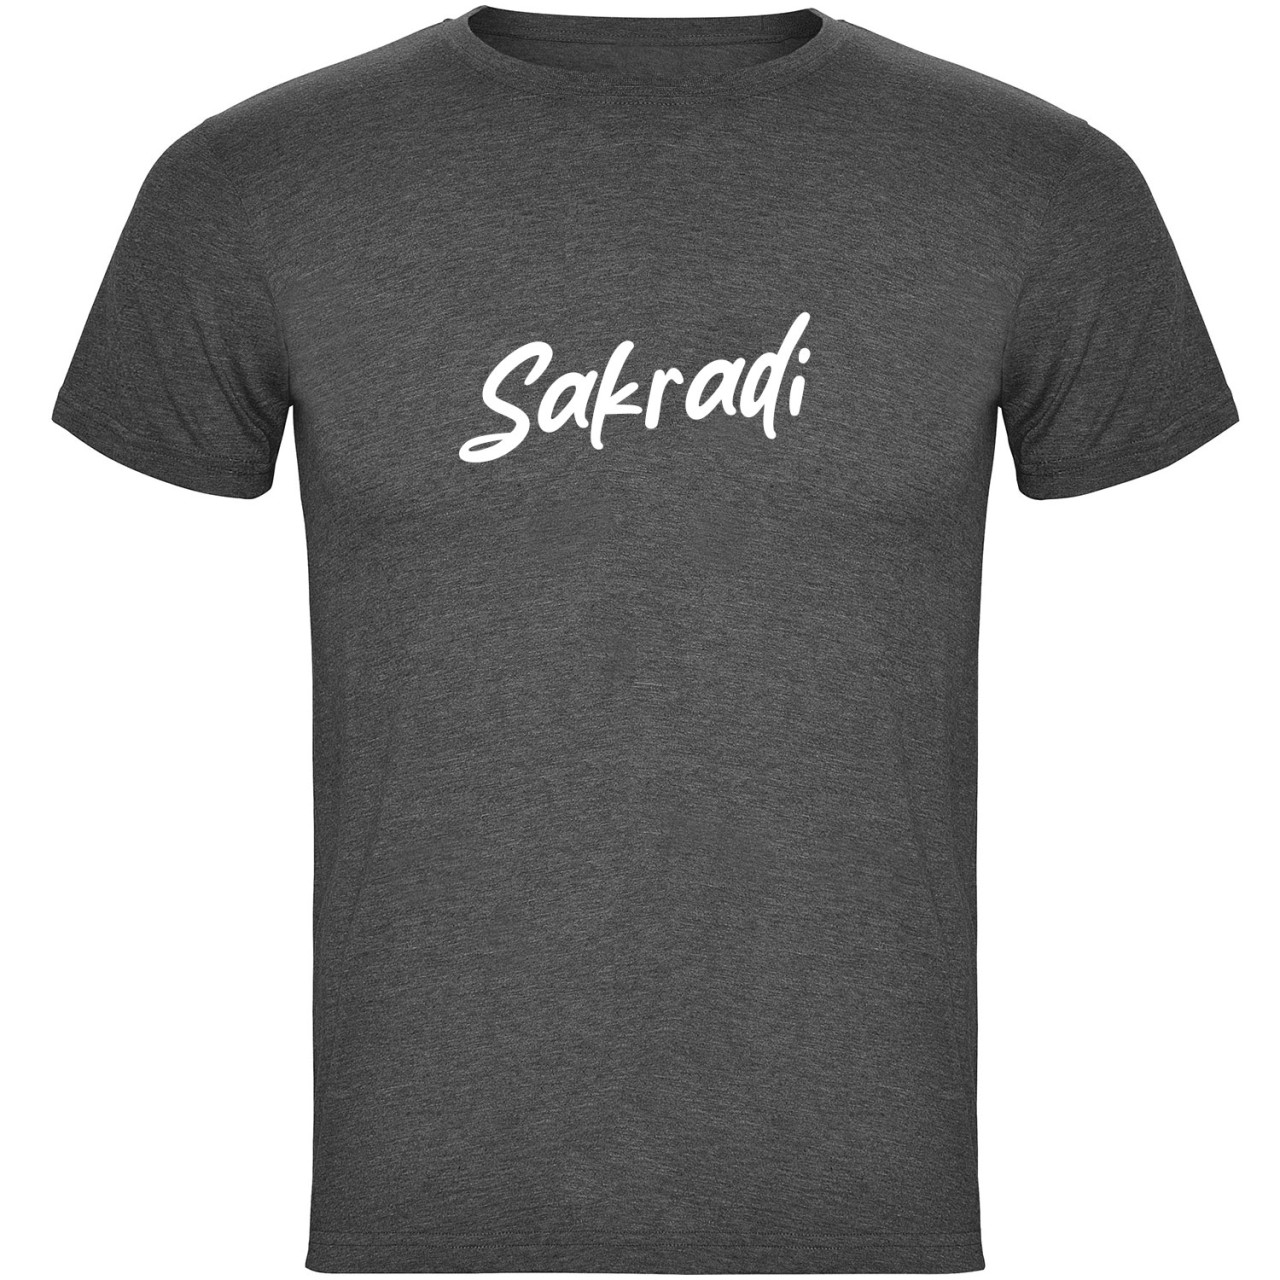 Sakradi Herren T-shirt